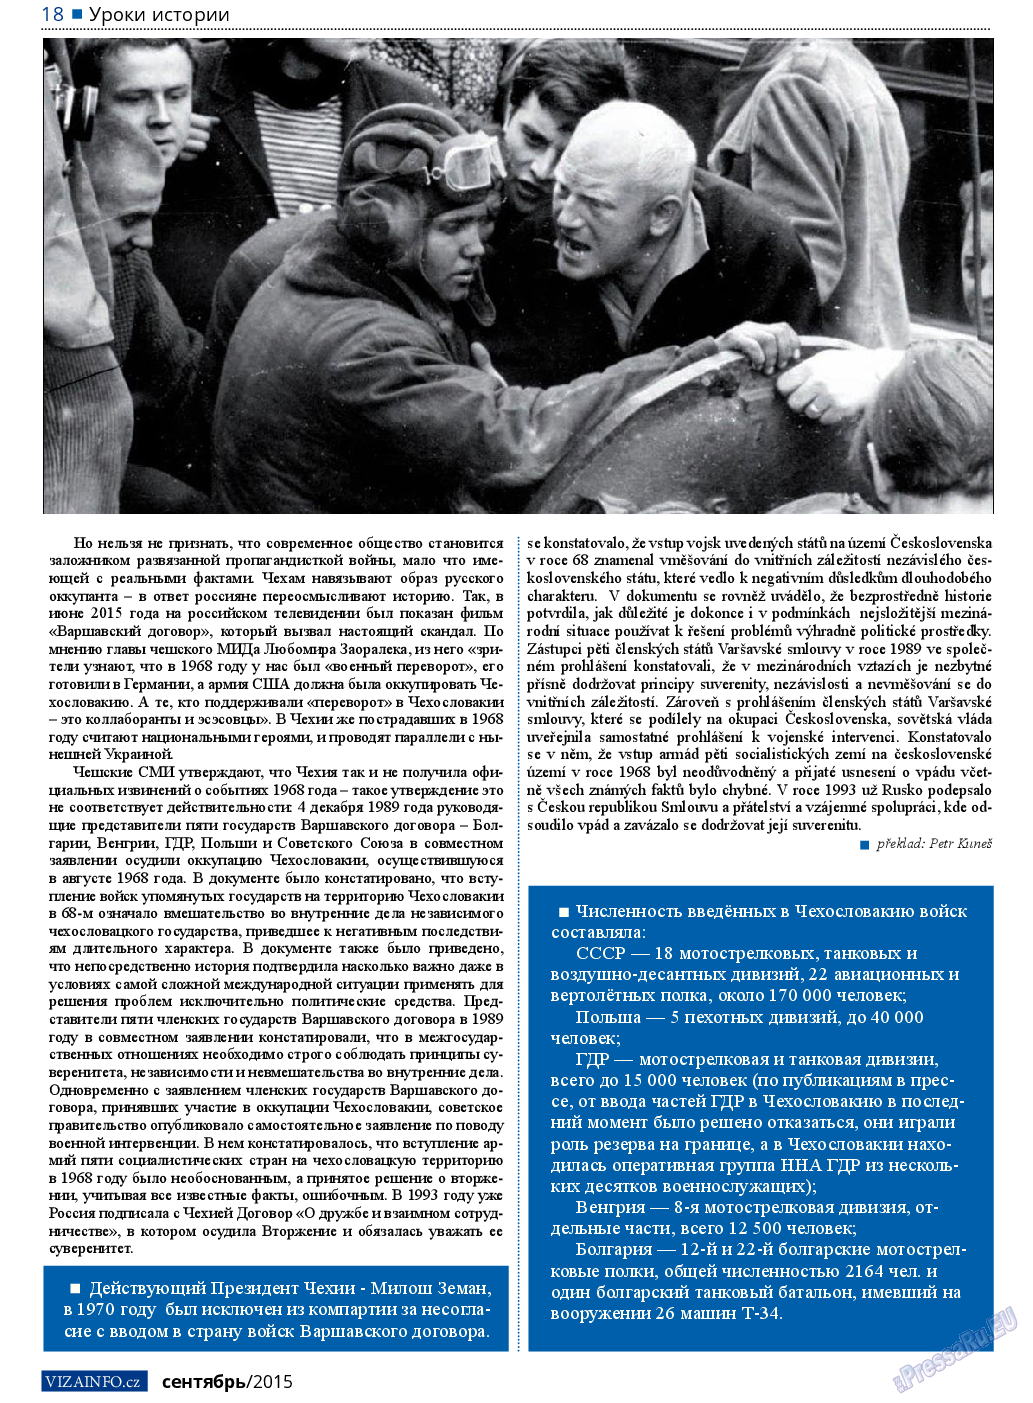 Vizainfo.cz (газета). 2015 год, номер 72, стр. 18